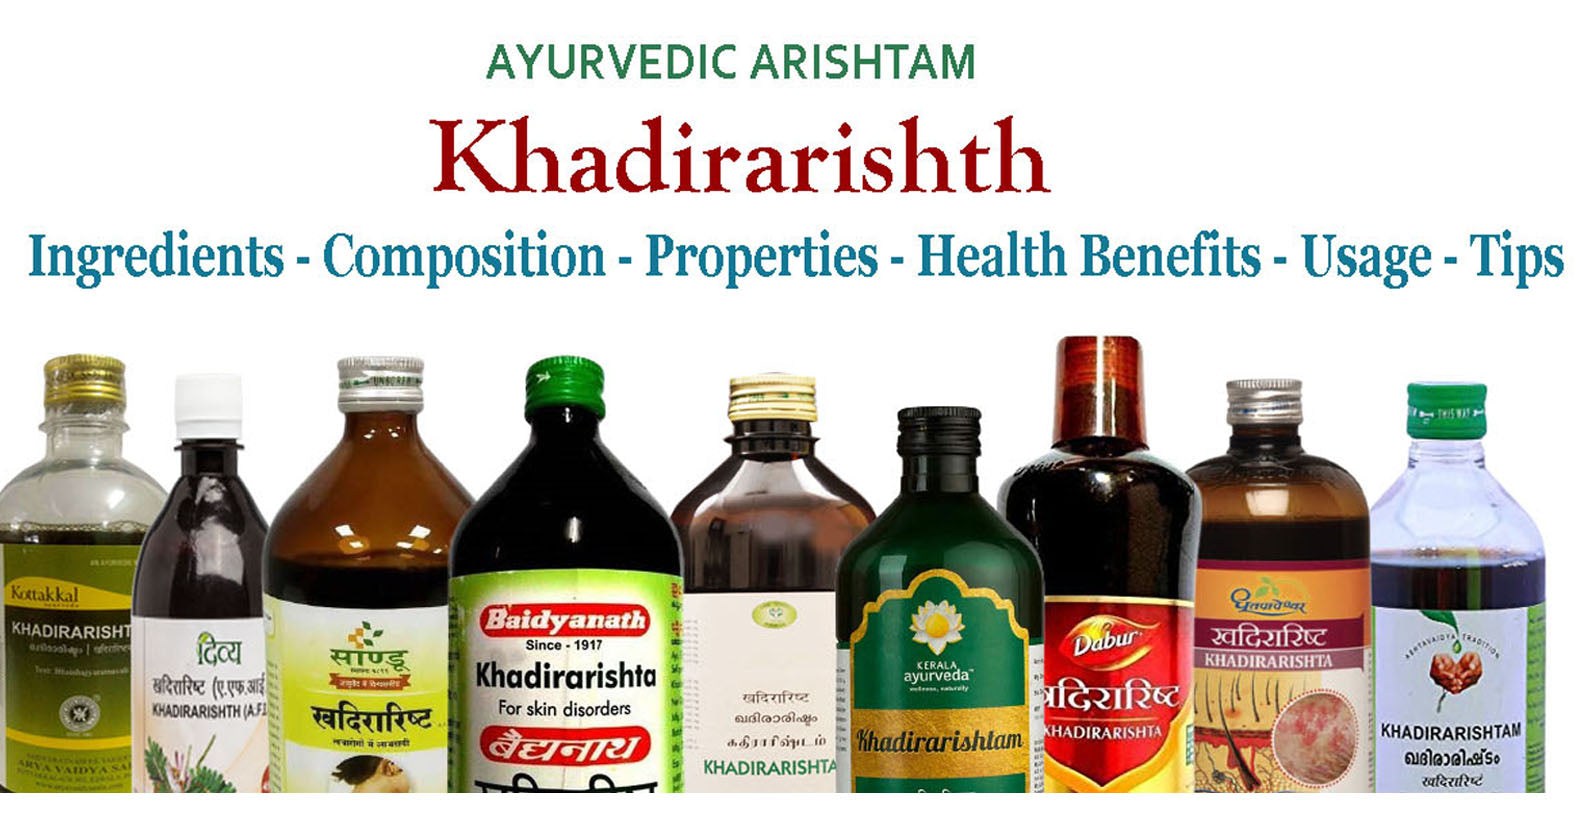 Khadirarishth- Ingredients, Composition, Properties, Health Benefits, Usage, Tips